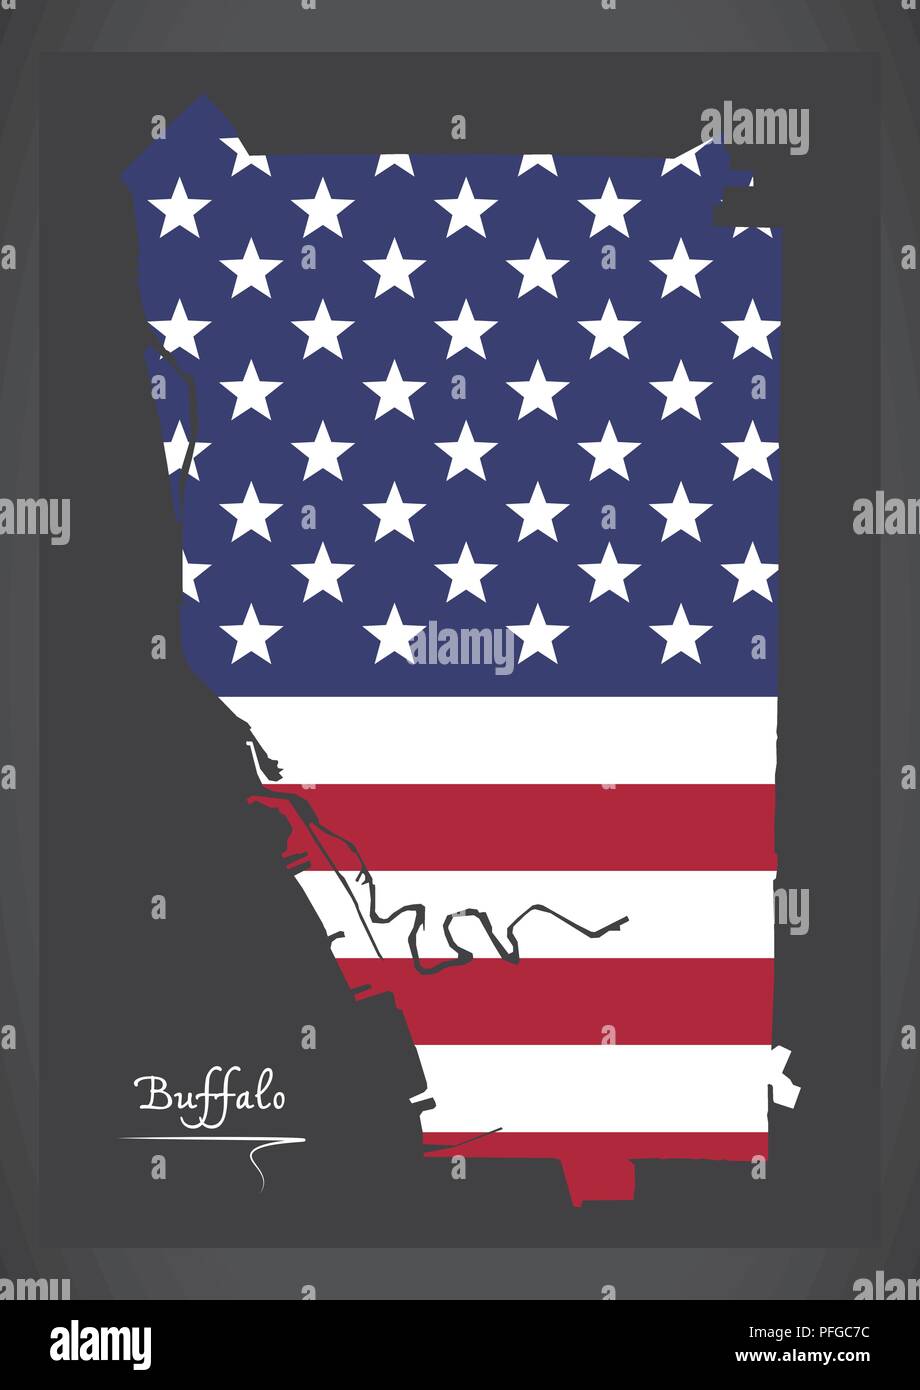 Buffalo New York map with American national flag illustration Stock Vector